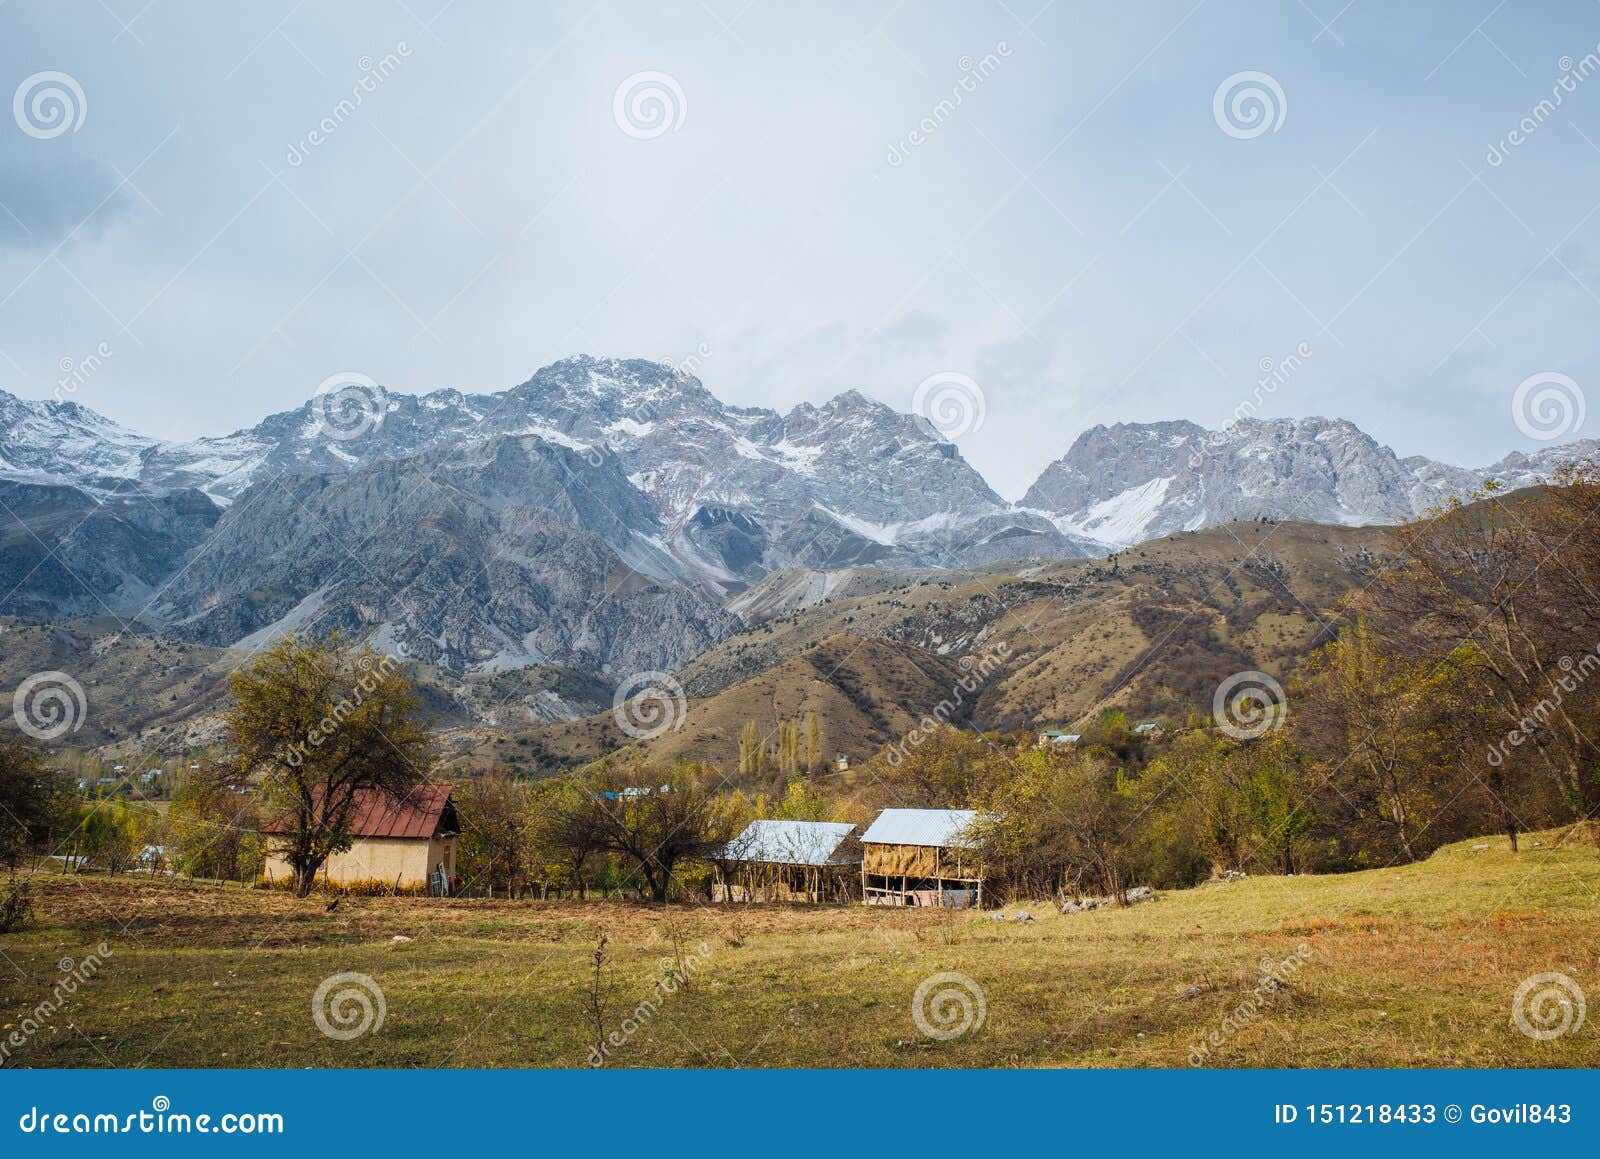 ARSLANBOB KIRGIZISTAN: Sikt av den Arslanbob byn i sydlig Kirgizistan, med berg i bakgrunden under höst. Sikt av den Arslanbob byn i sydlig Kirgizistan, med berg i bakgrunden under höst